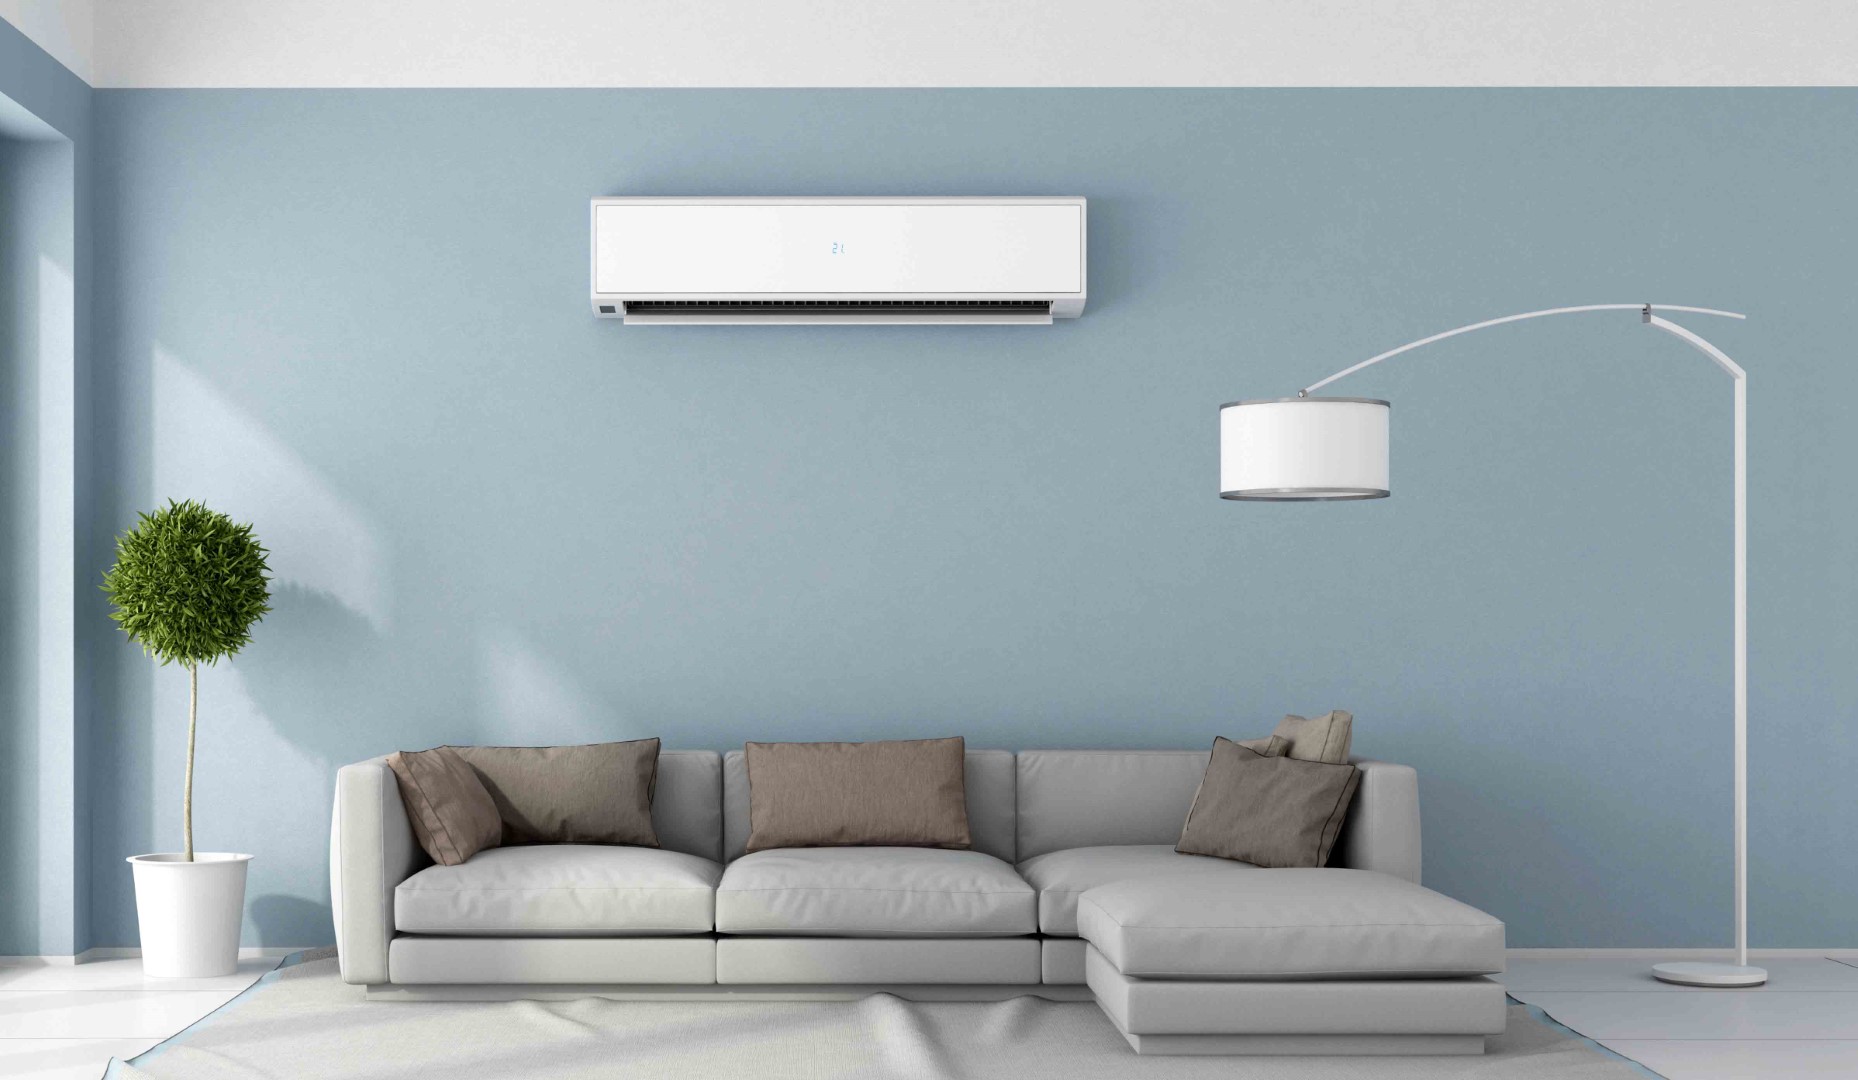 Mini split Thermostat Options: Enhance Control and Comfort